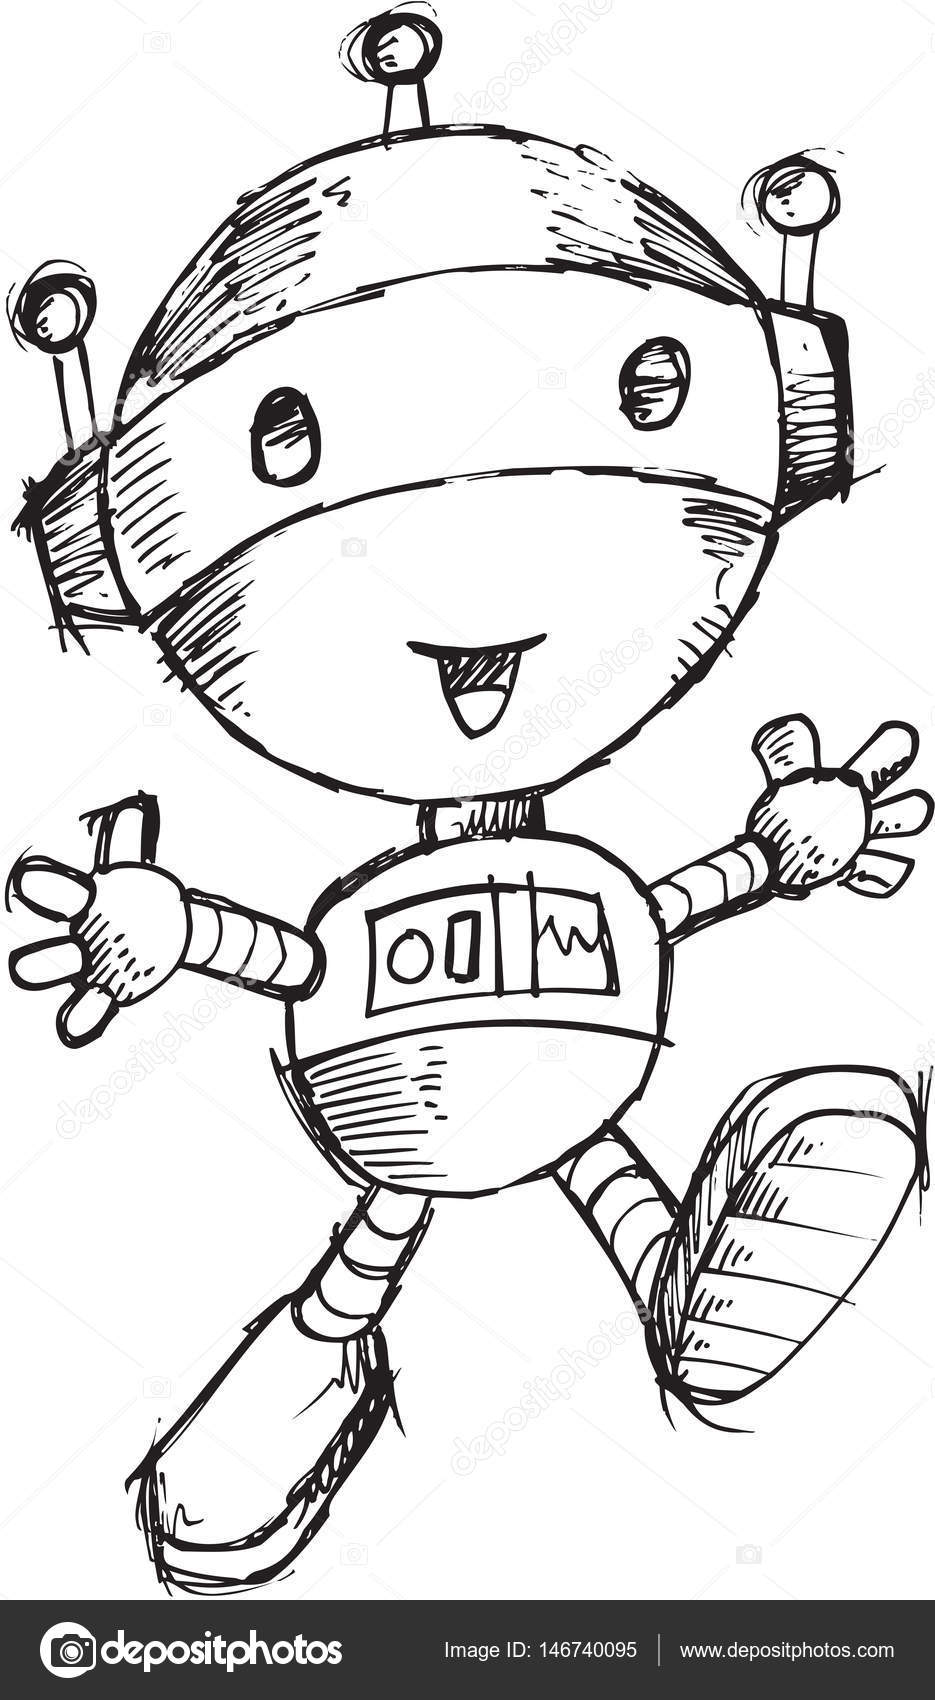 https://st3.depositphotos.com/1008522/14674/v/1600/depositphotos_146740095-stock-illustration-robot-doodle-sketch-vector-illustration.jpg